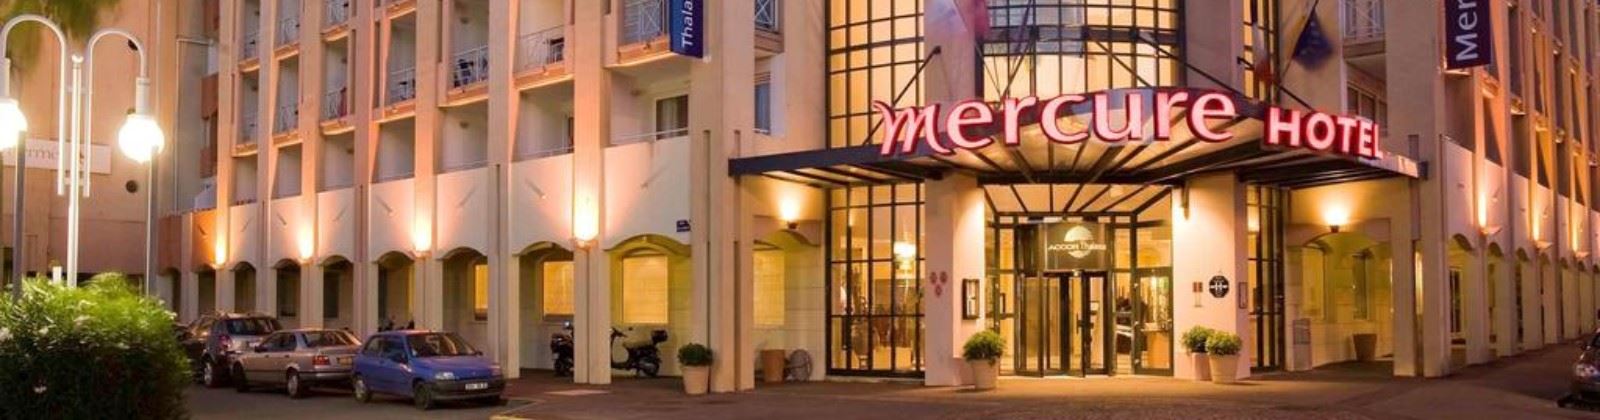 mercure thalassa port frejus olevene hotel restaurant evenement 